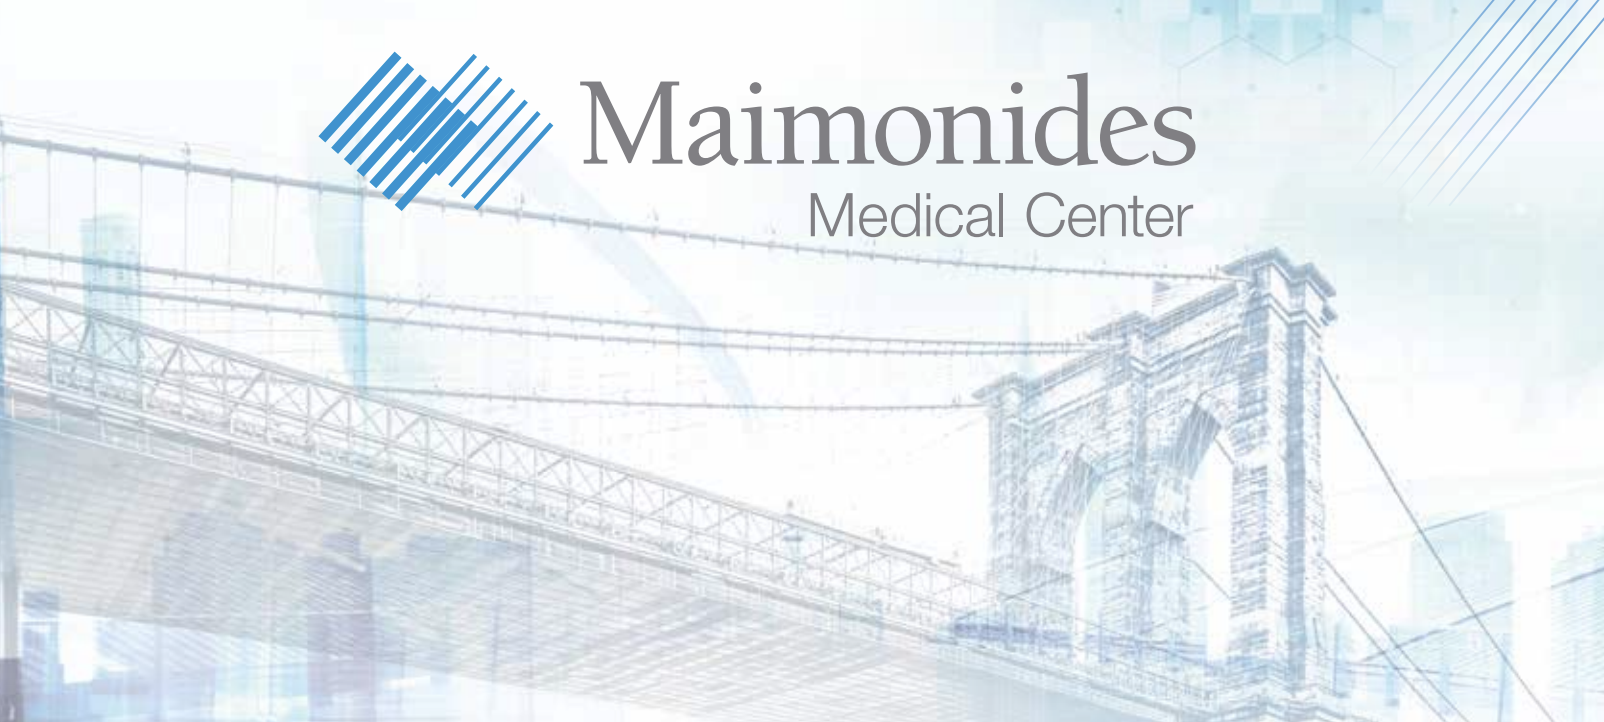 Maimonides Medical Center logo with Brooklyn Bridge background